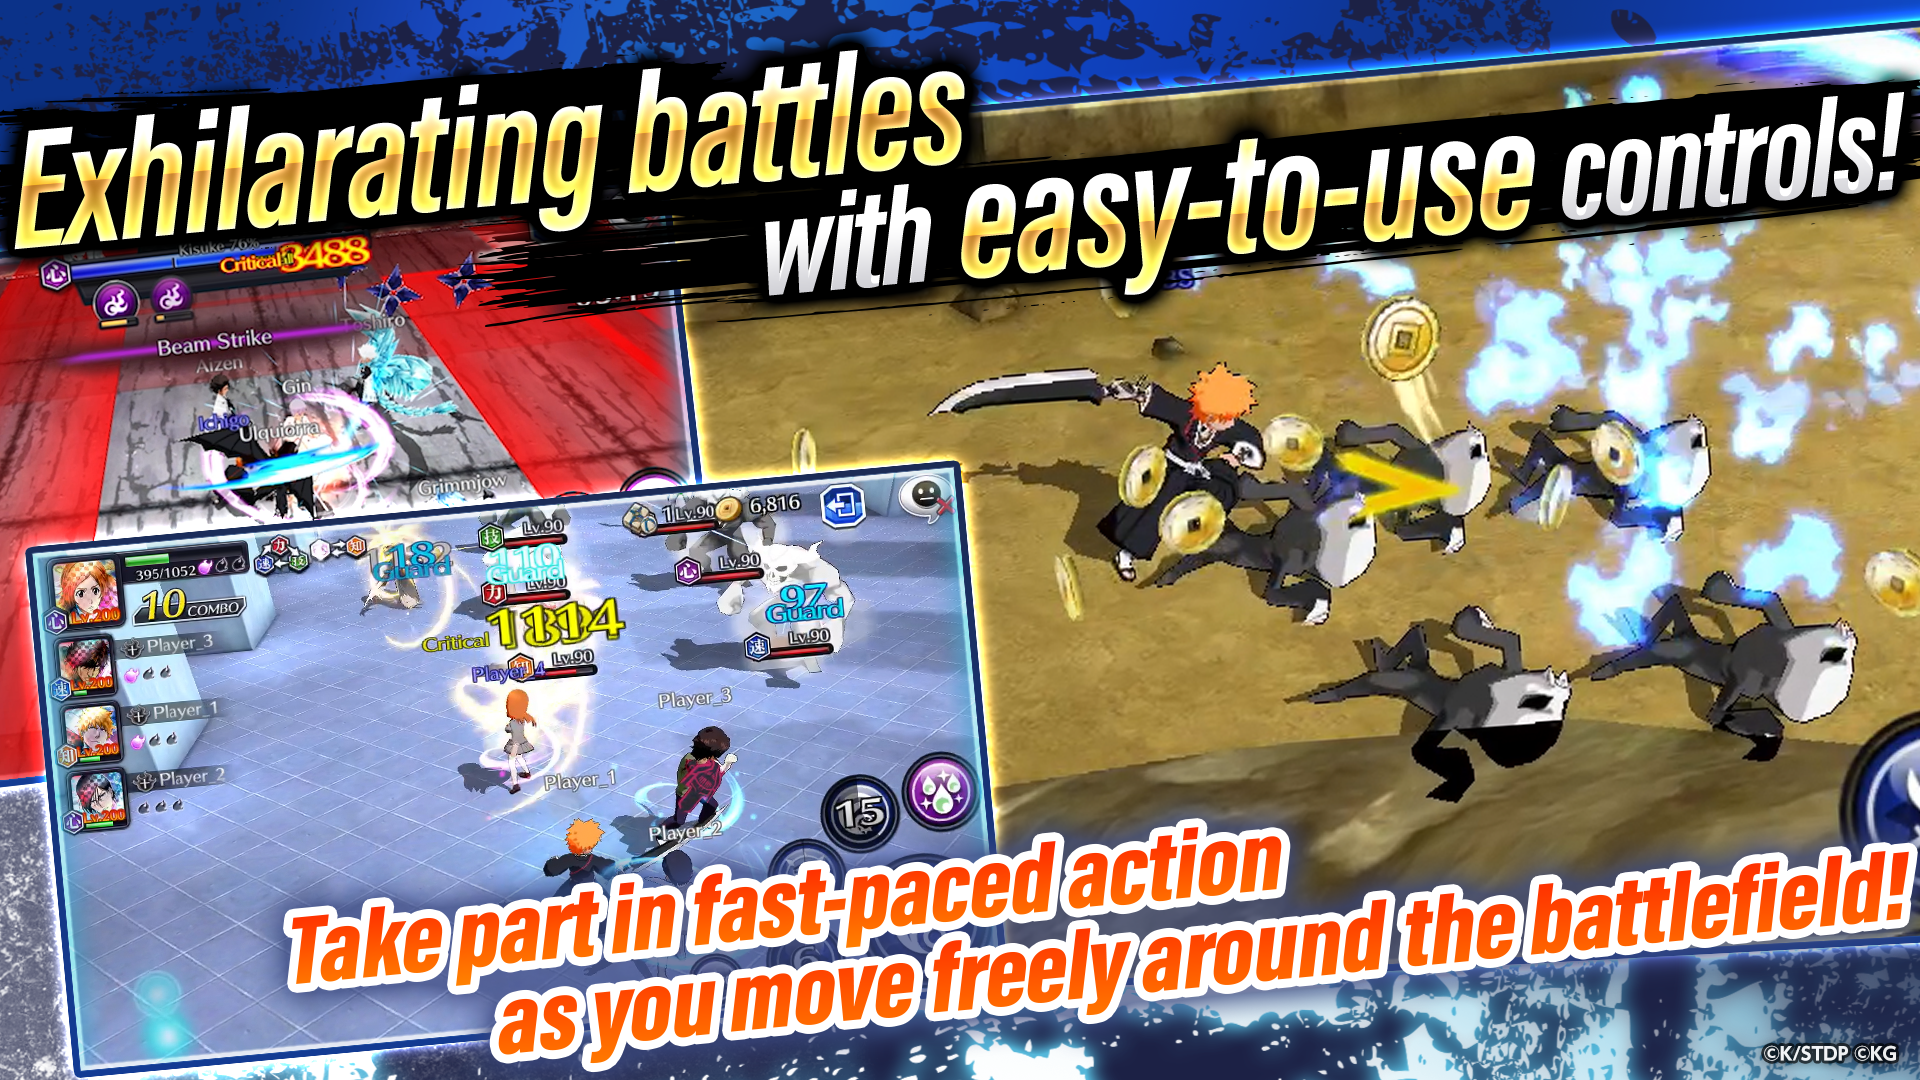 Play 3d fighting Game: Play 3d Bleach Battle